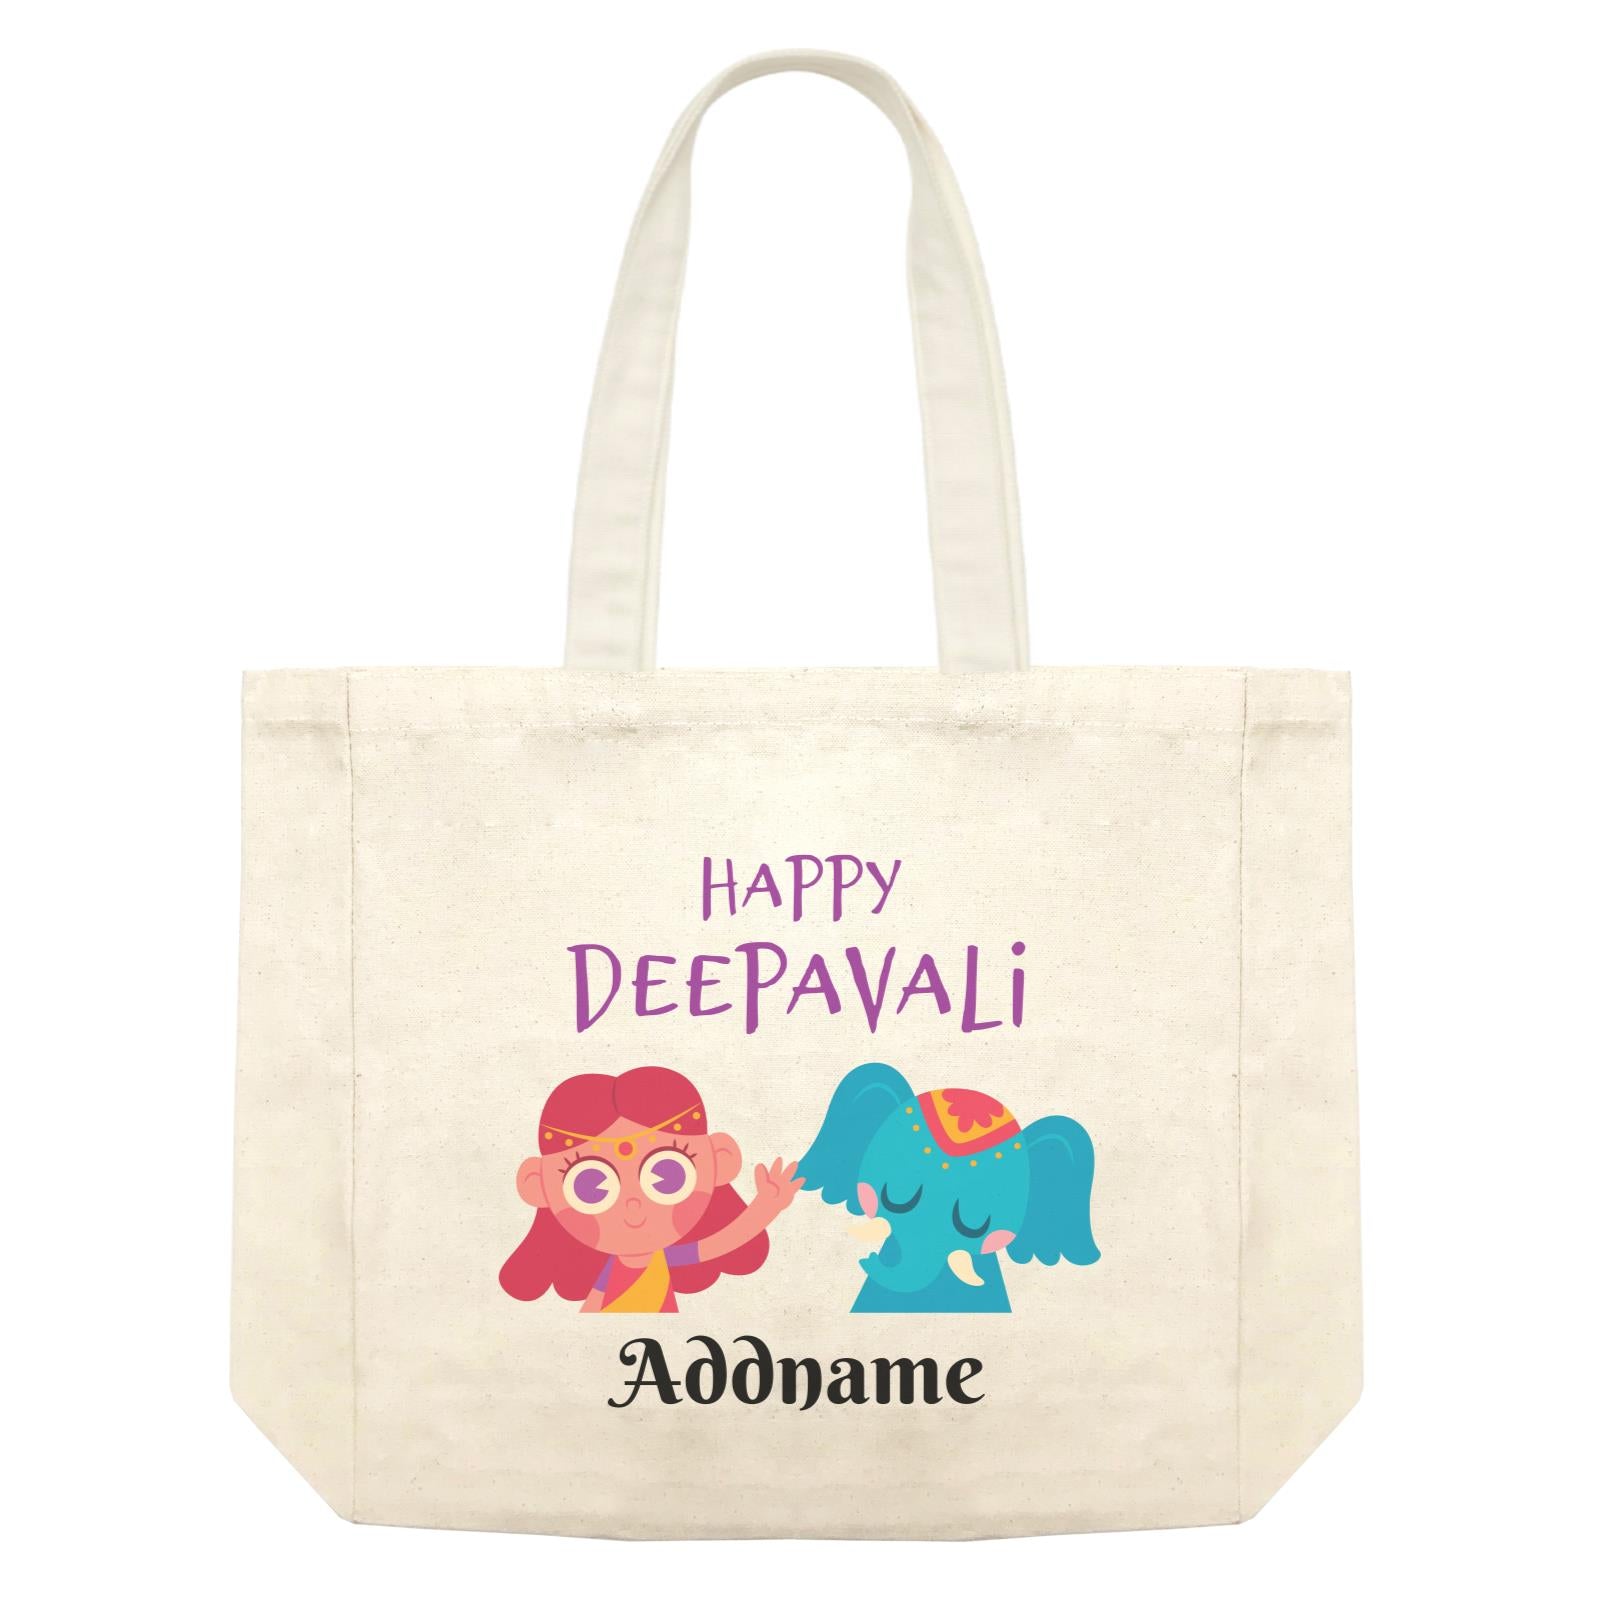 Deepavali Series Little Girl Wishes You Happy Deepavali Shopping Bag